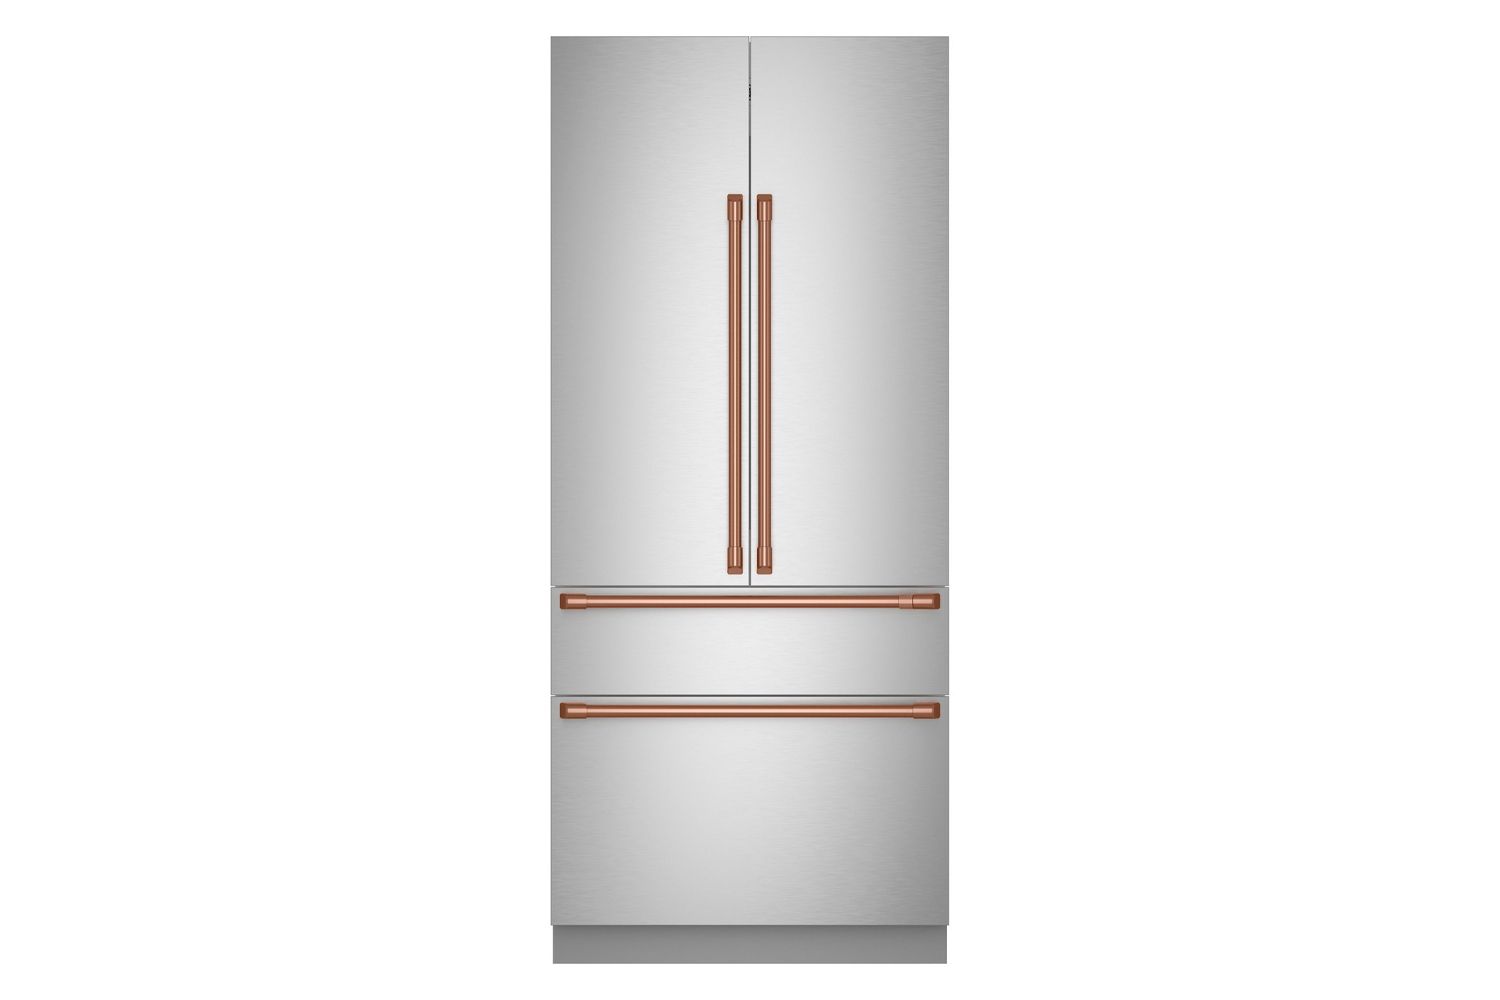 Café Integrated French-Door Refrigerator